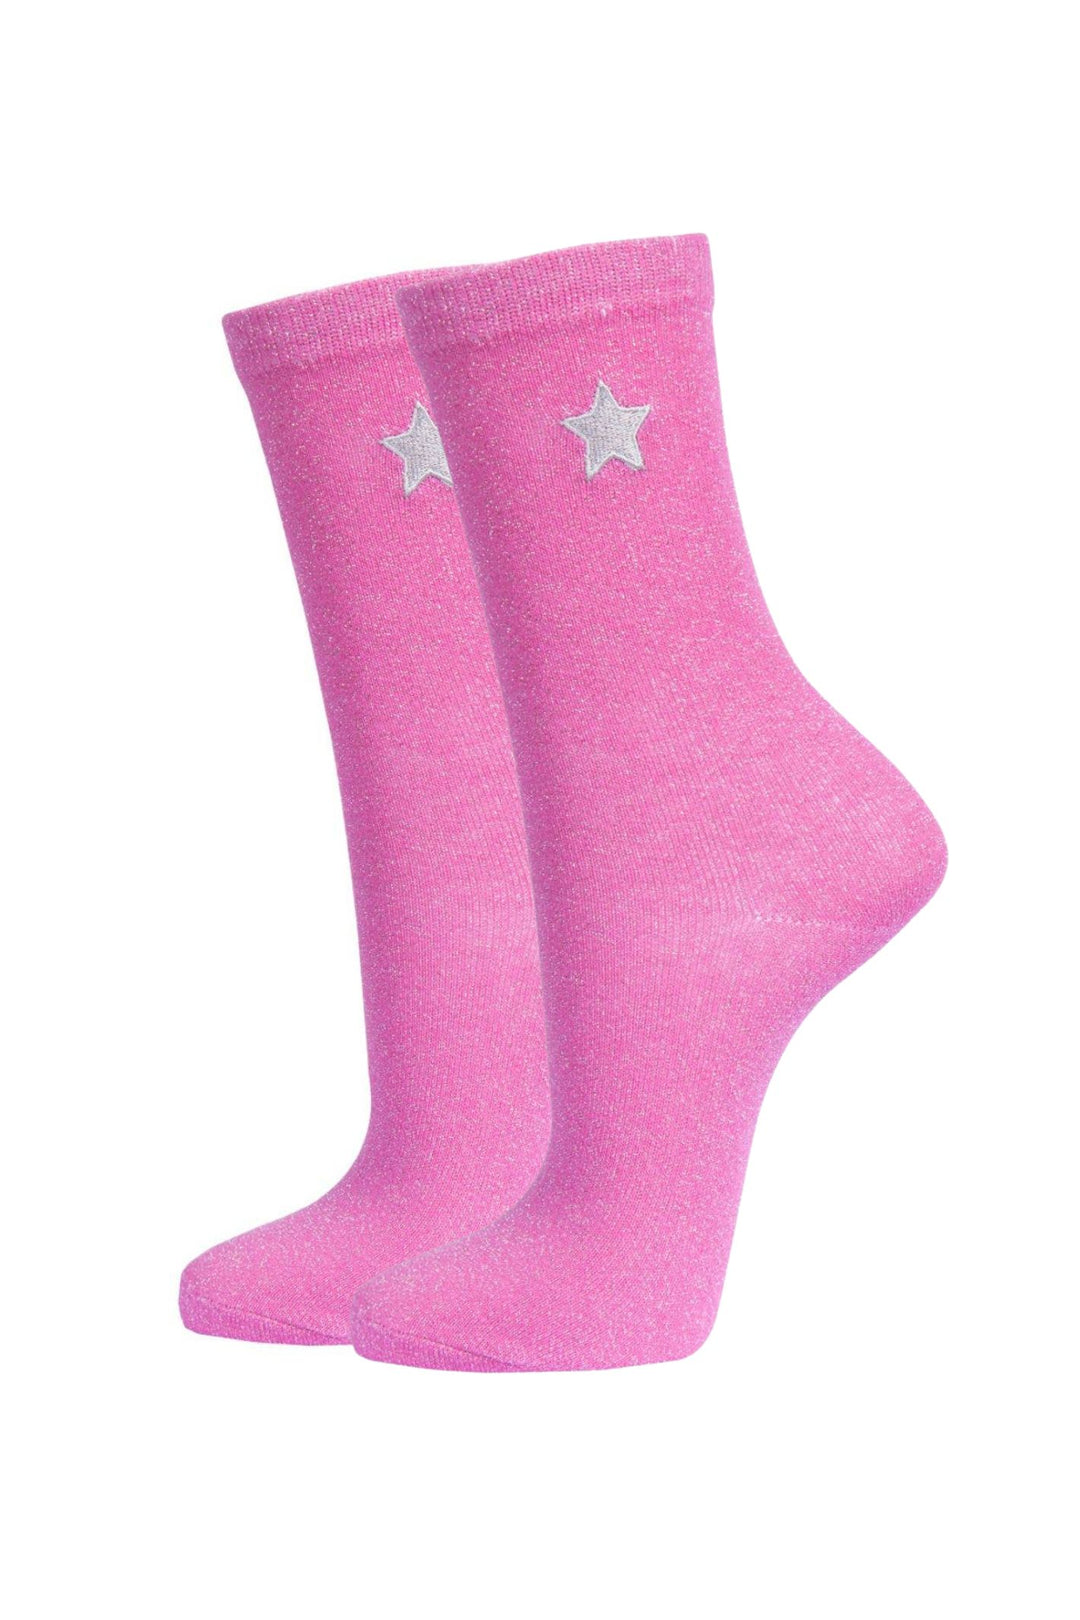 Pink Glitter Socks Embroidered Star Ankle Socks